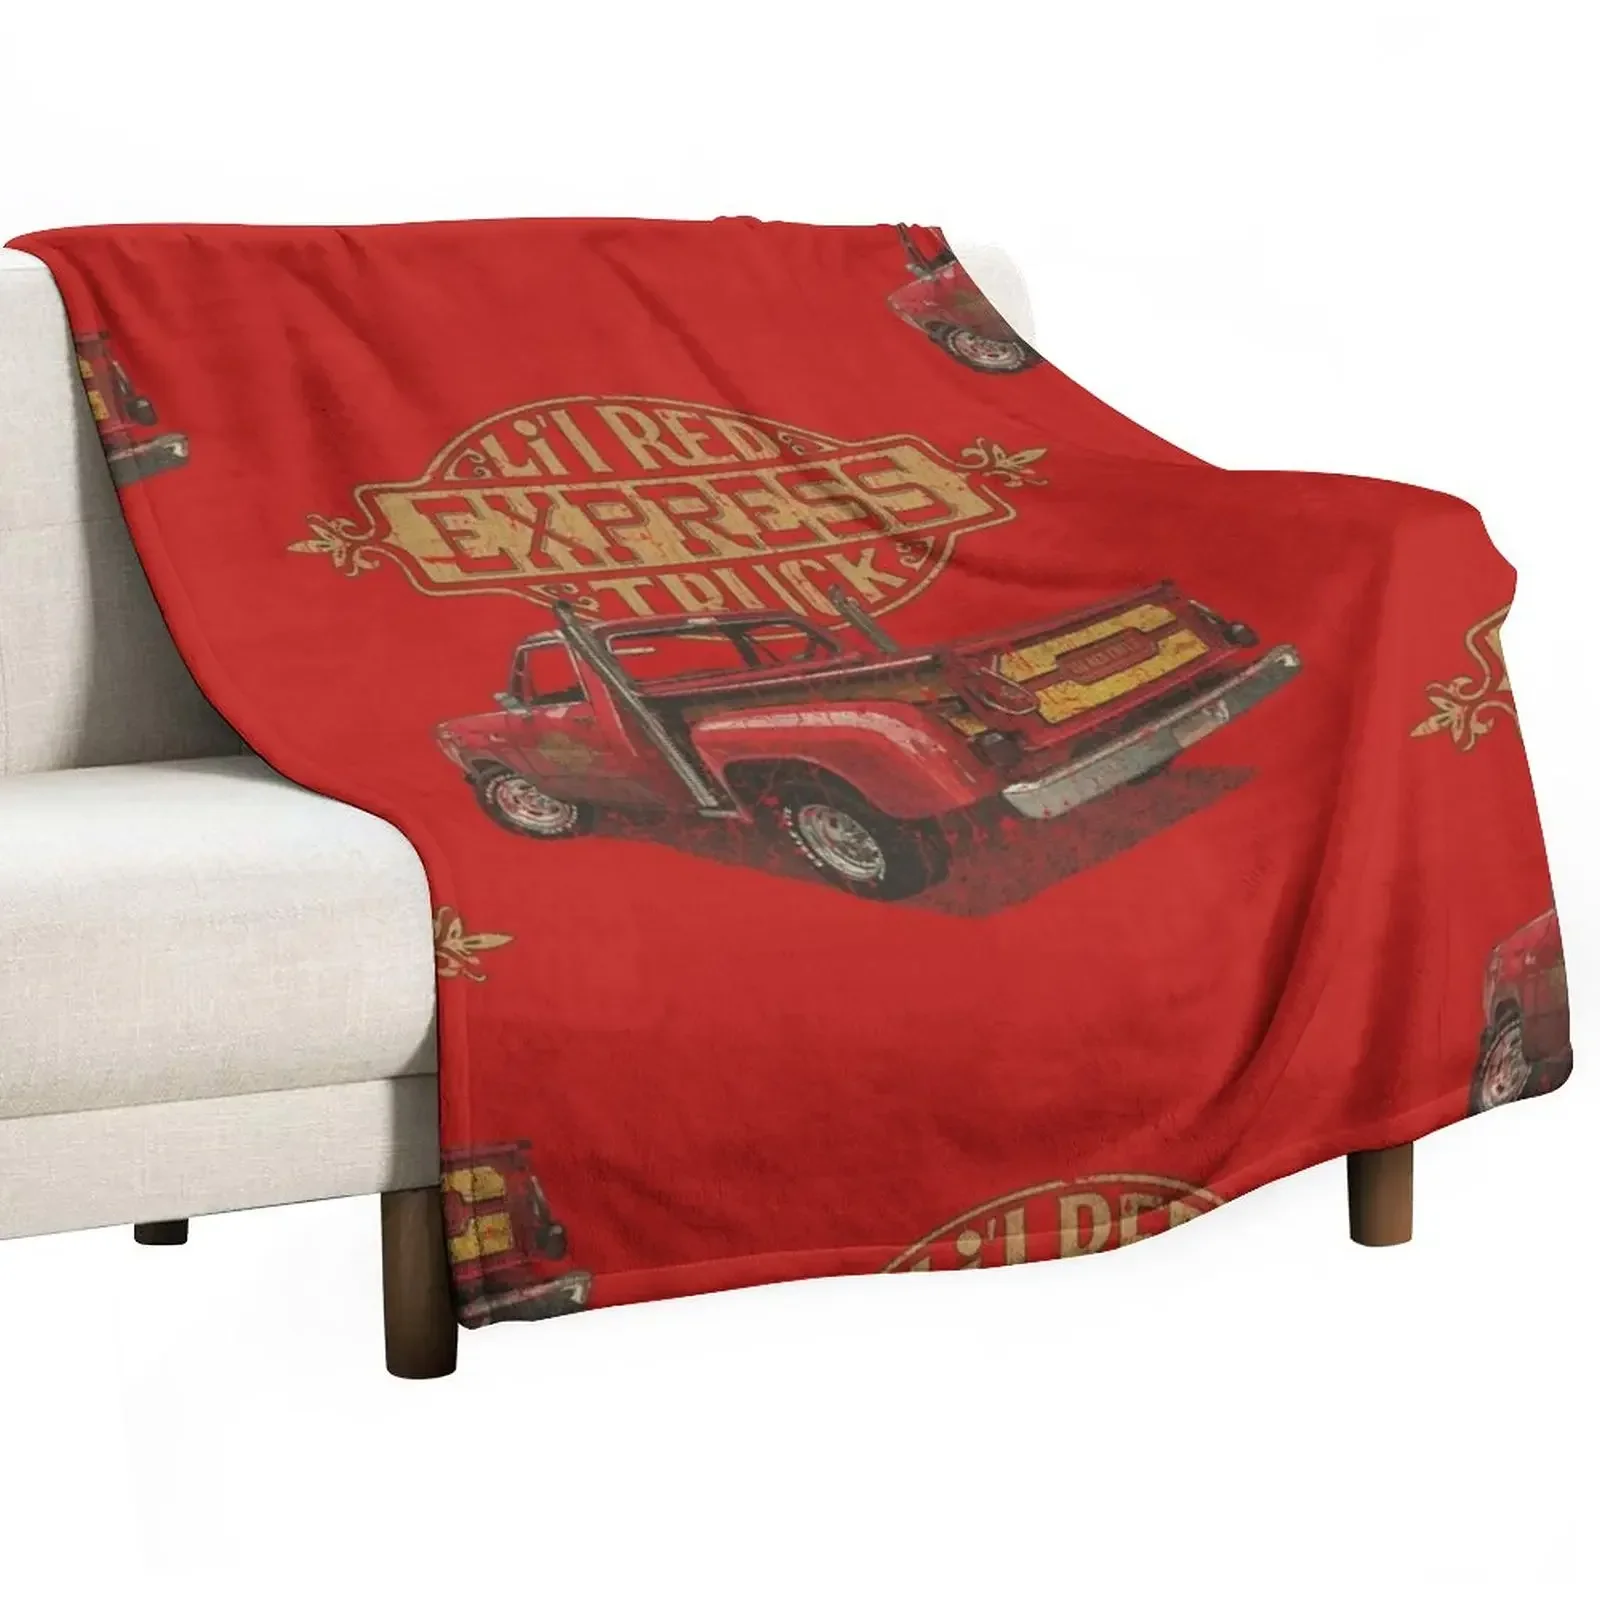 

Lil' Red Express 1978 мягкое летнее одеяло для дивана